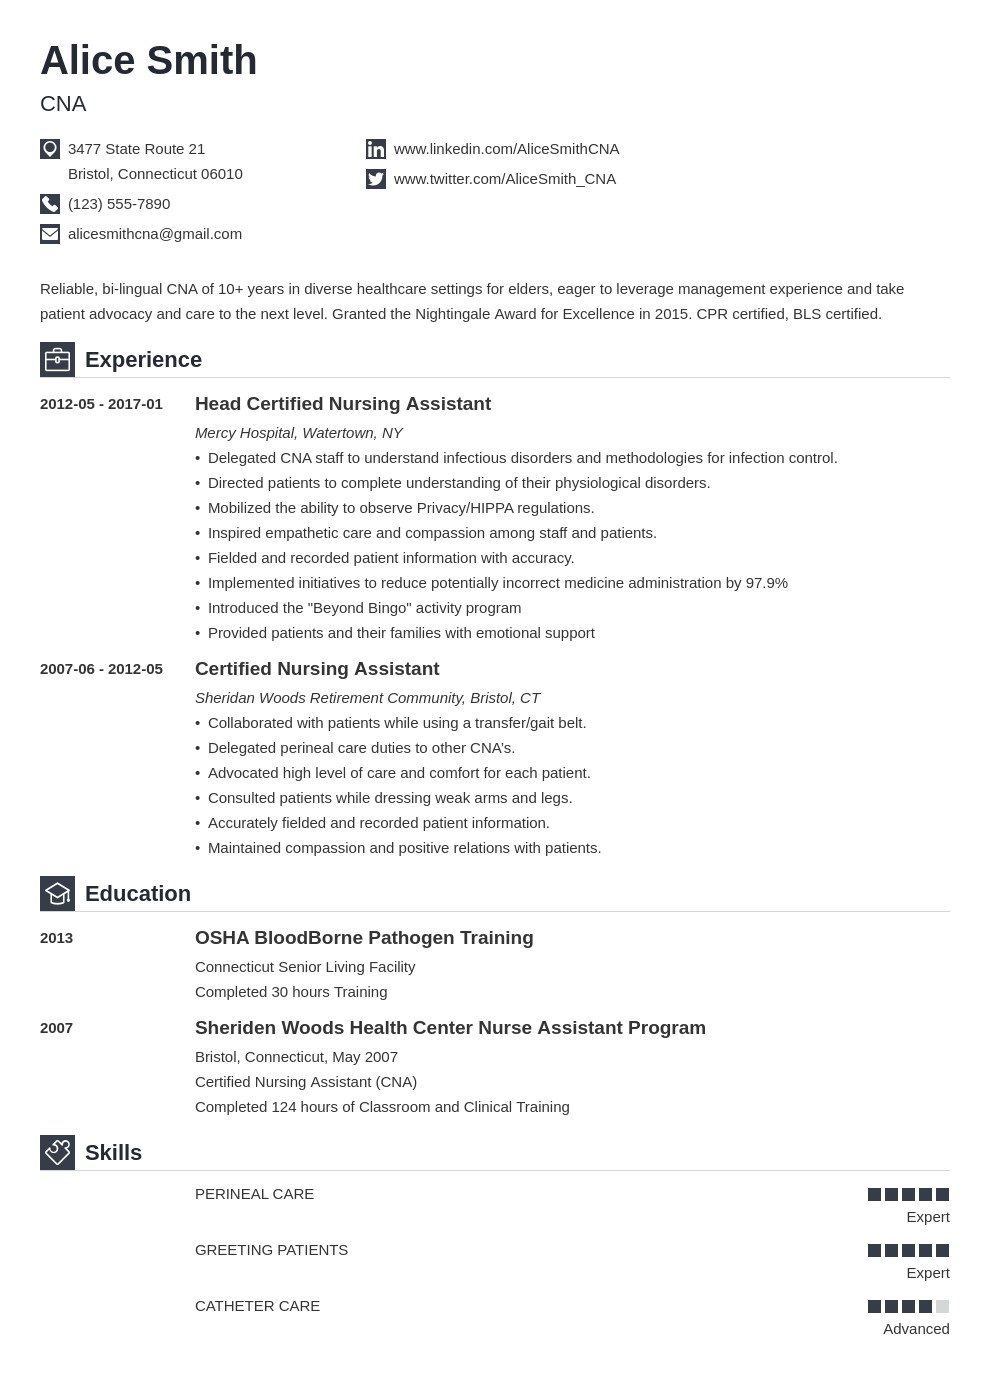 Job duties of a cna for a resume